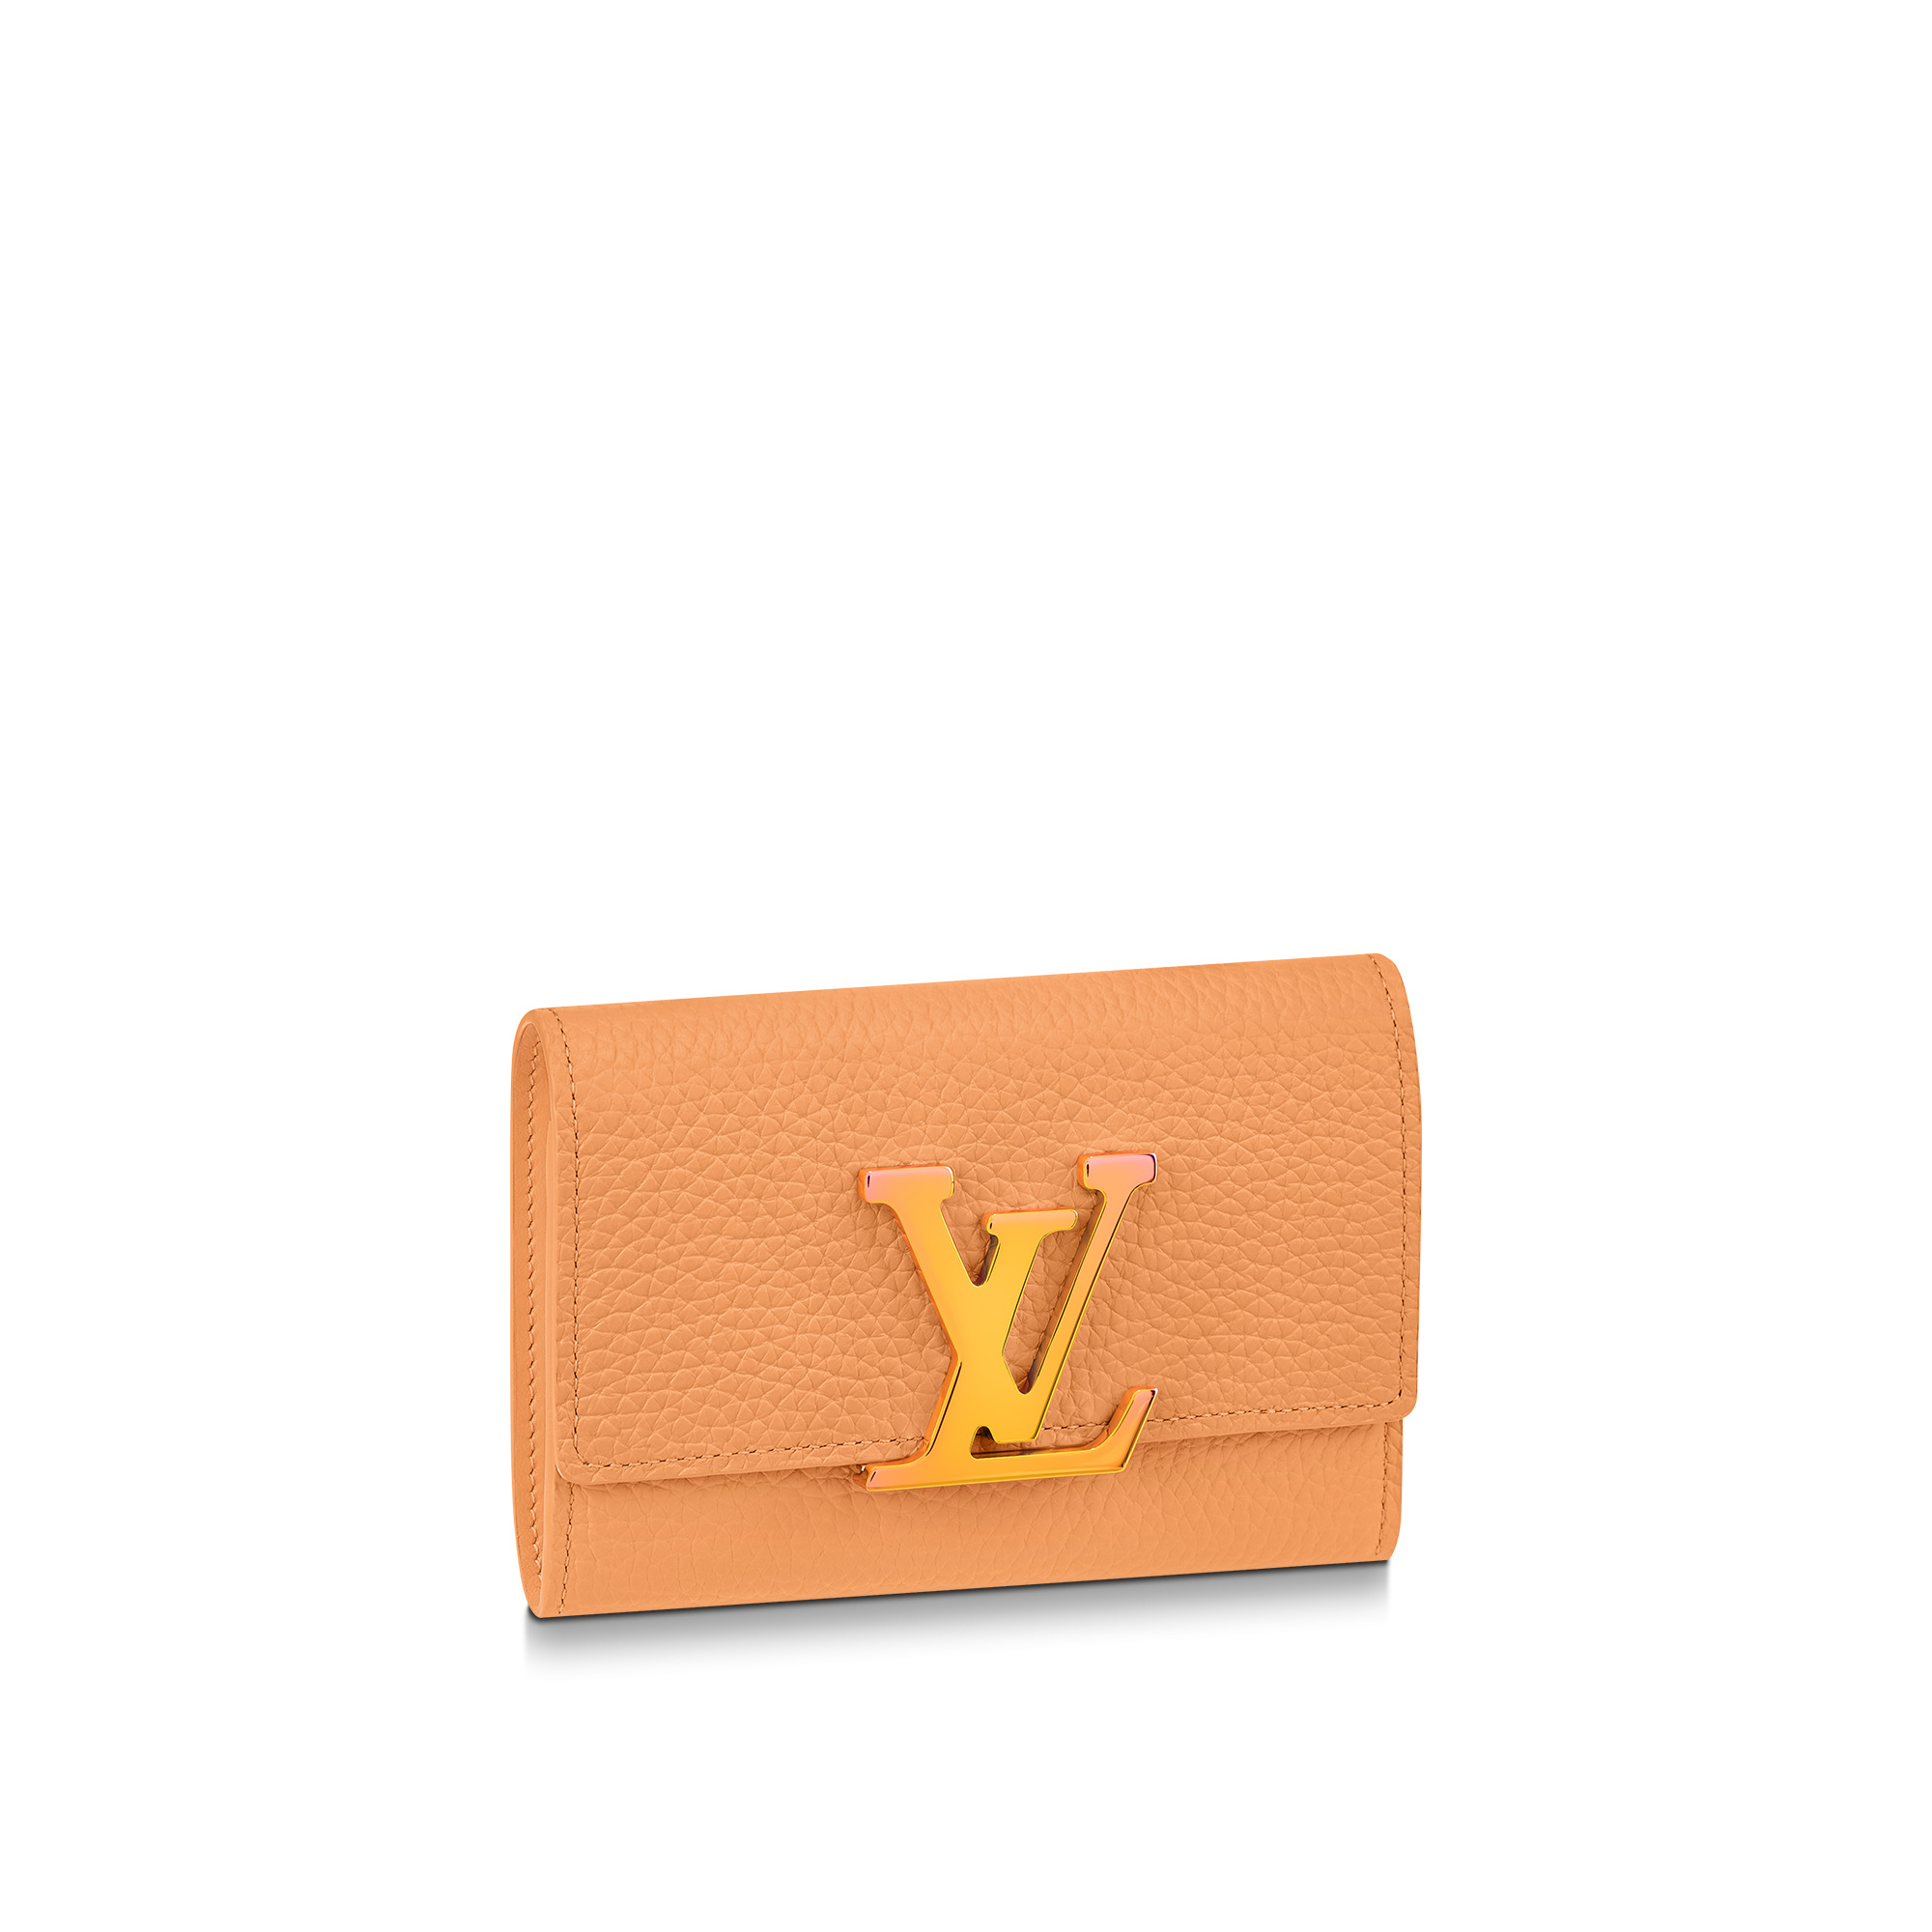 Louis Vuitton Capucines Compact Wallet Black Pink Taurillon